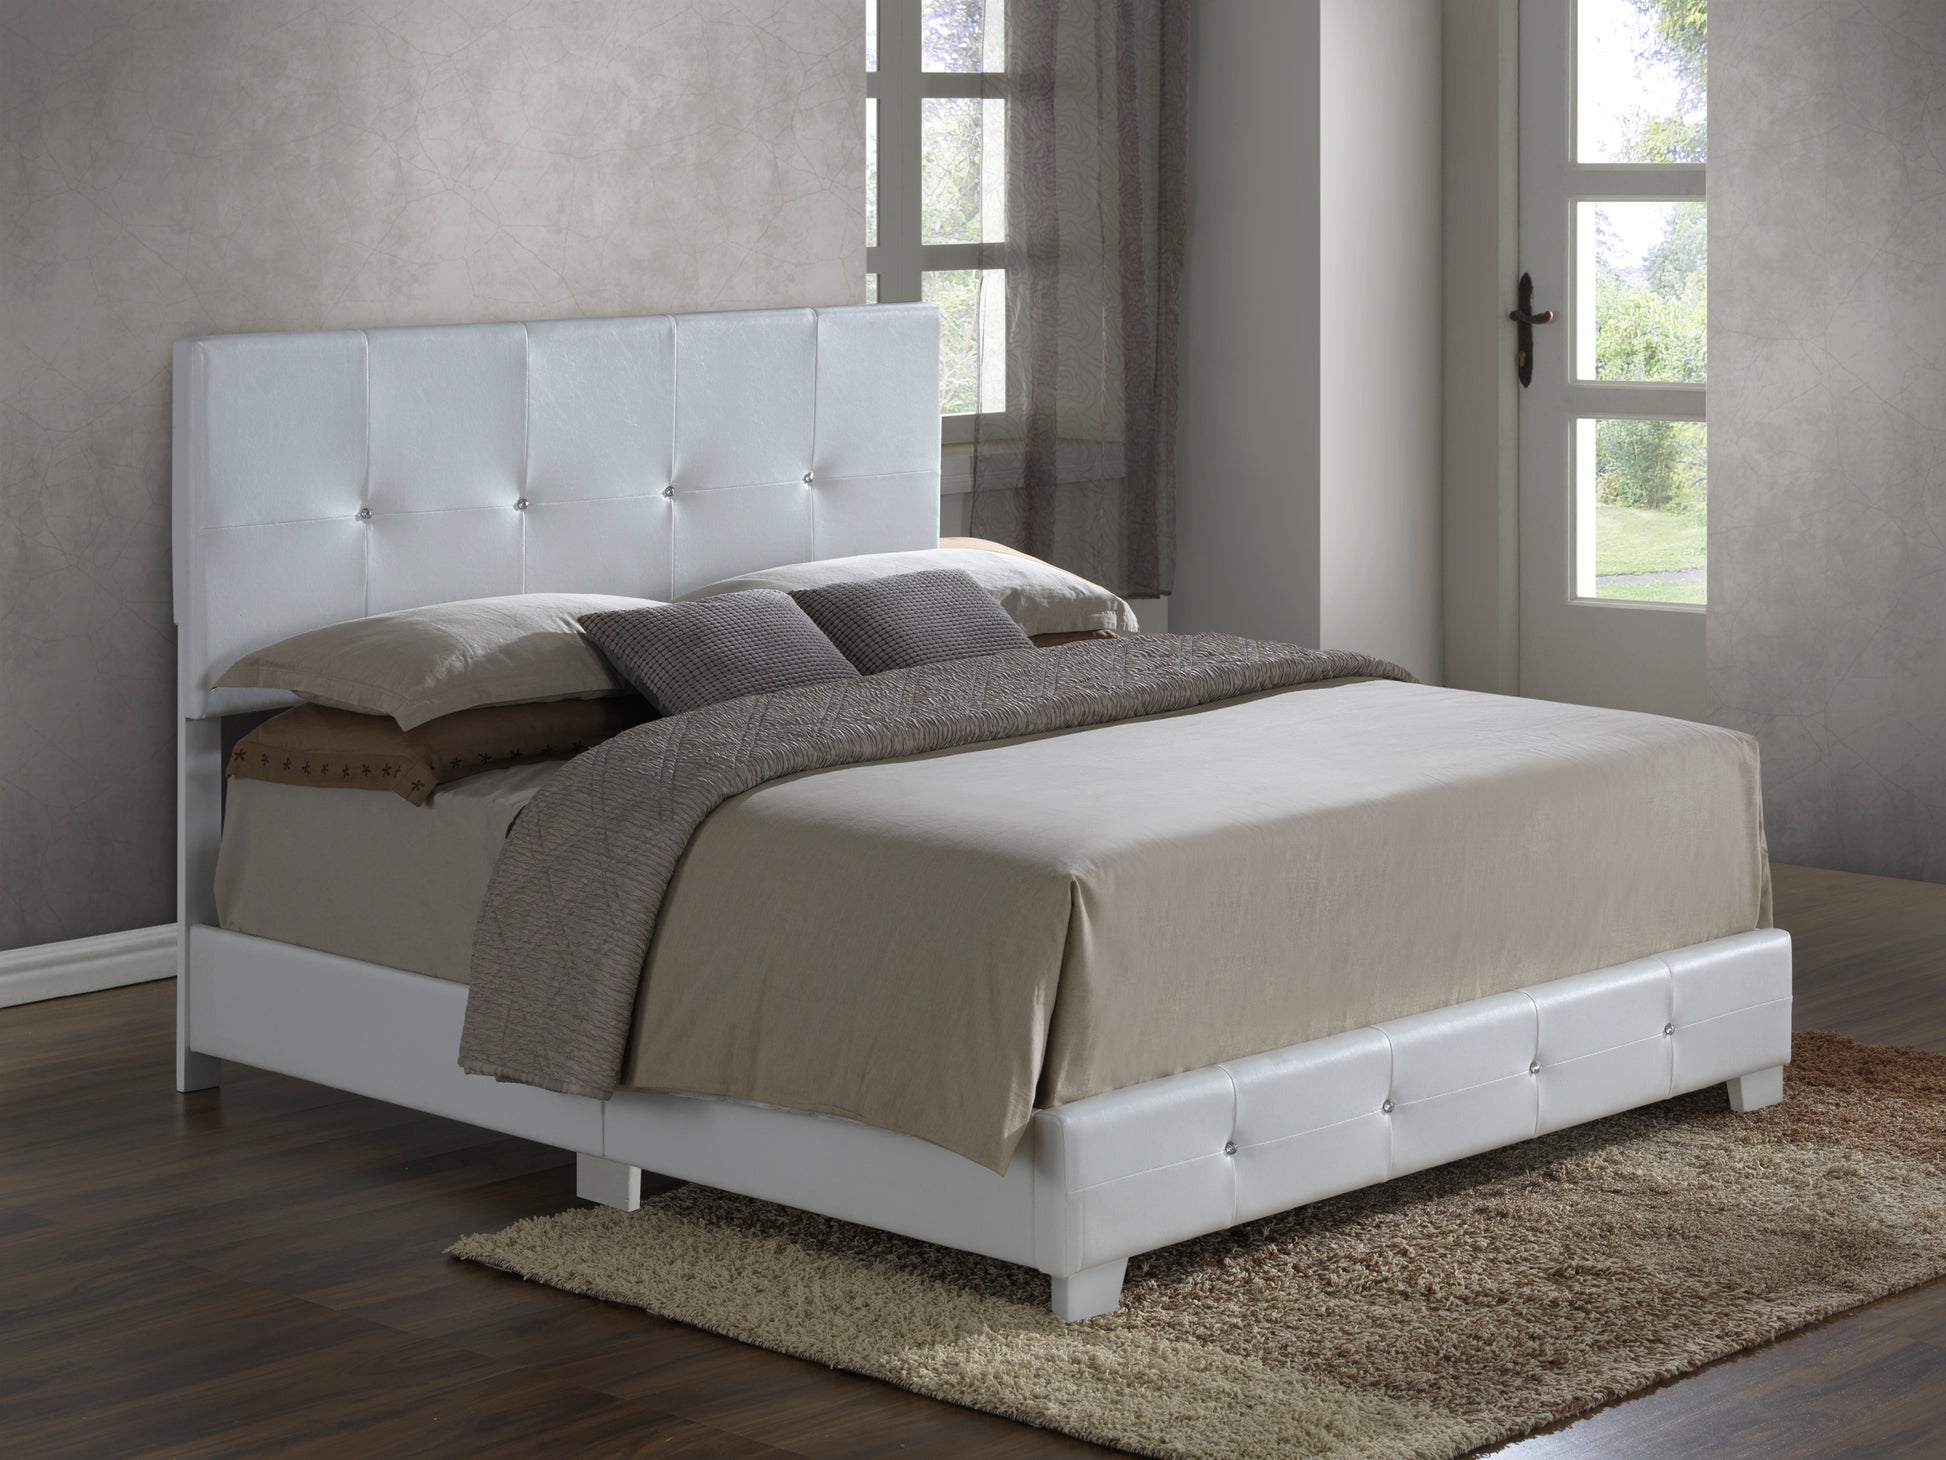 Nicole G2577 FB UP Full Bed , WHITE white-foam-pu